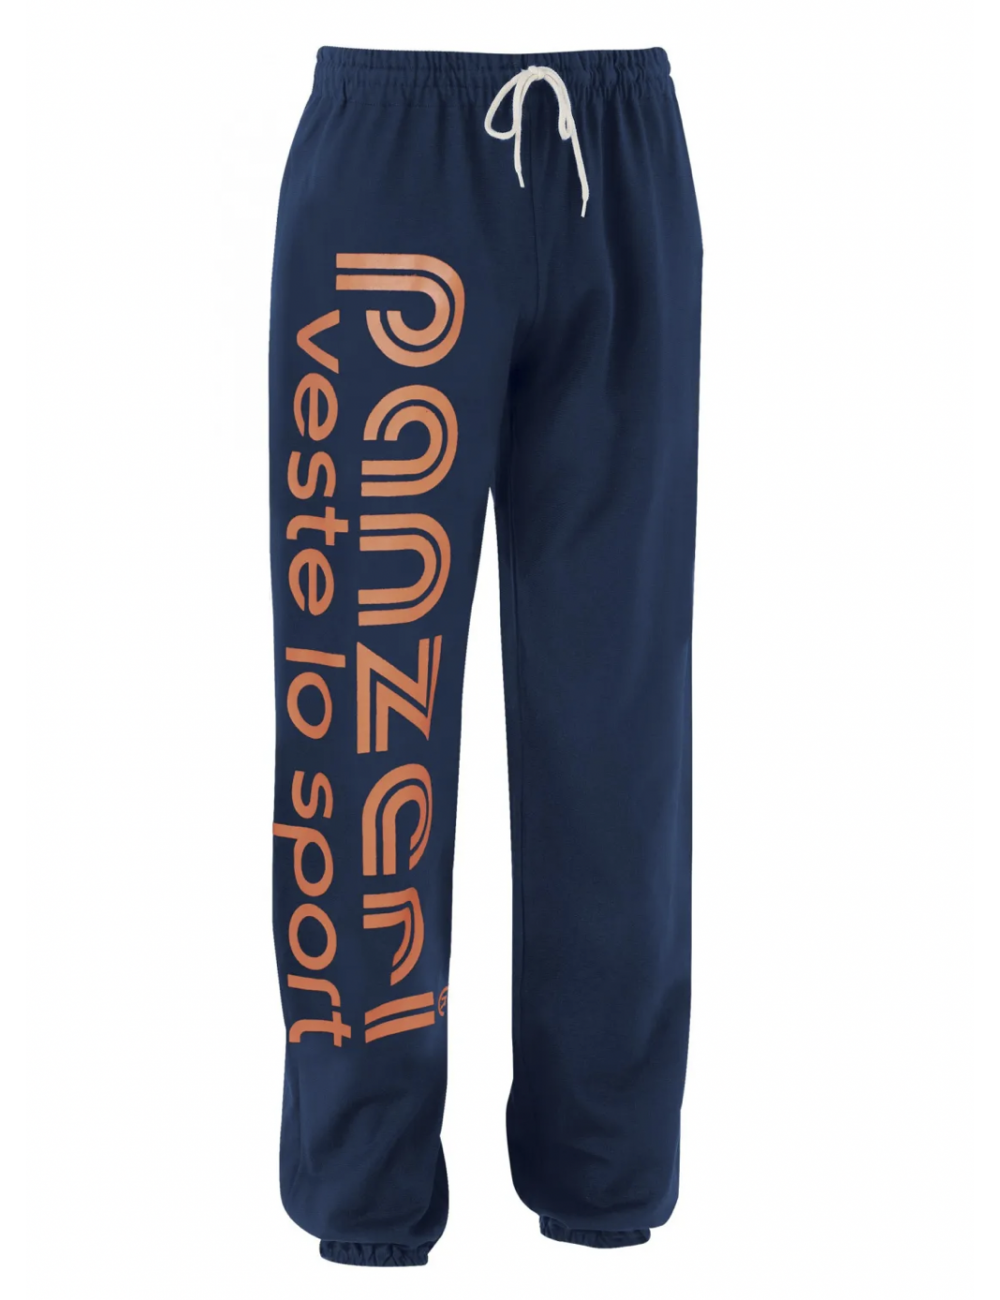 Pantalon de jogging PANZERI bleu marine et orange fluo